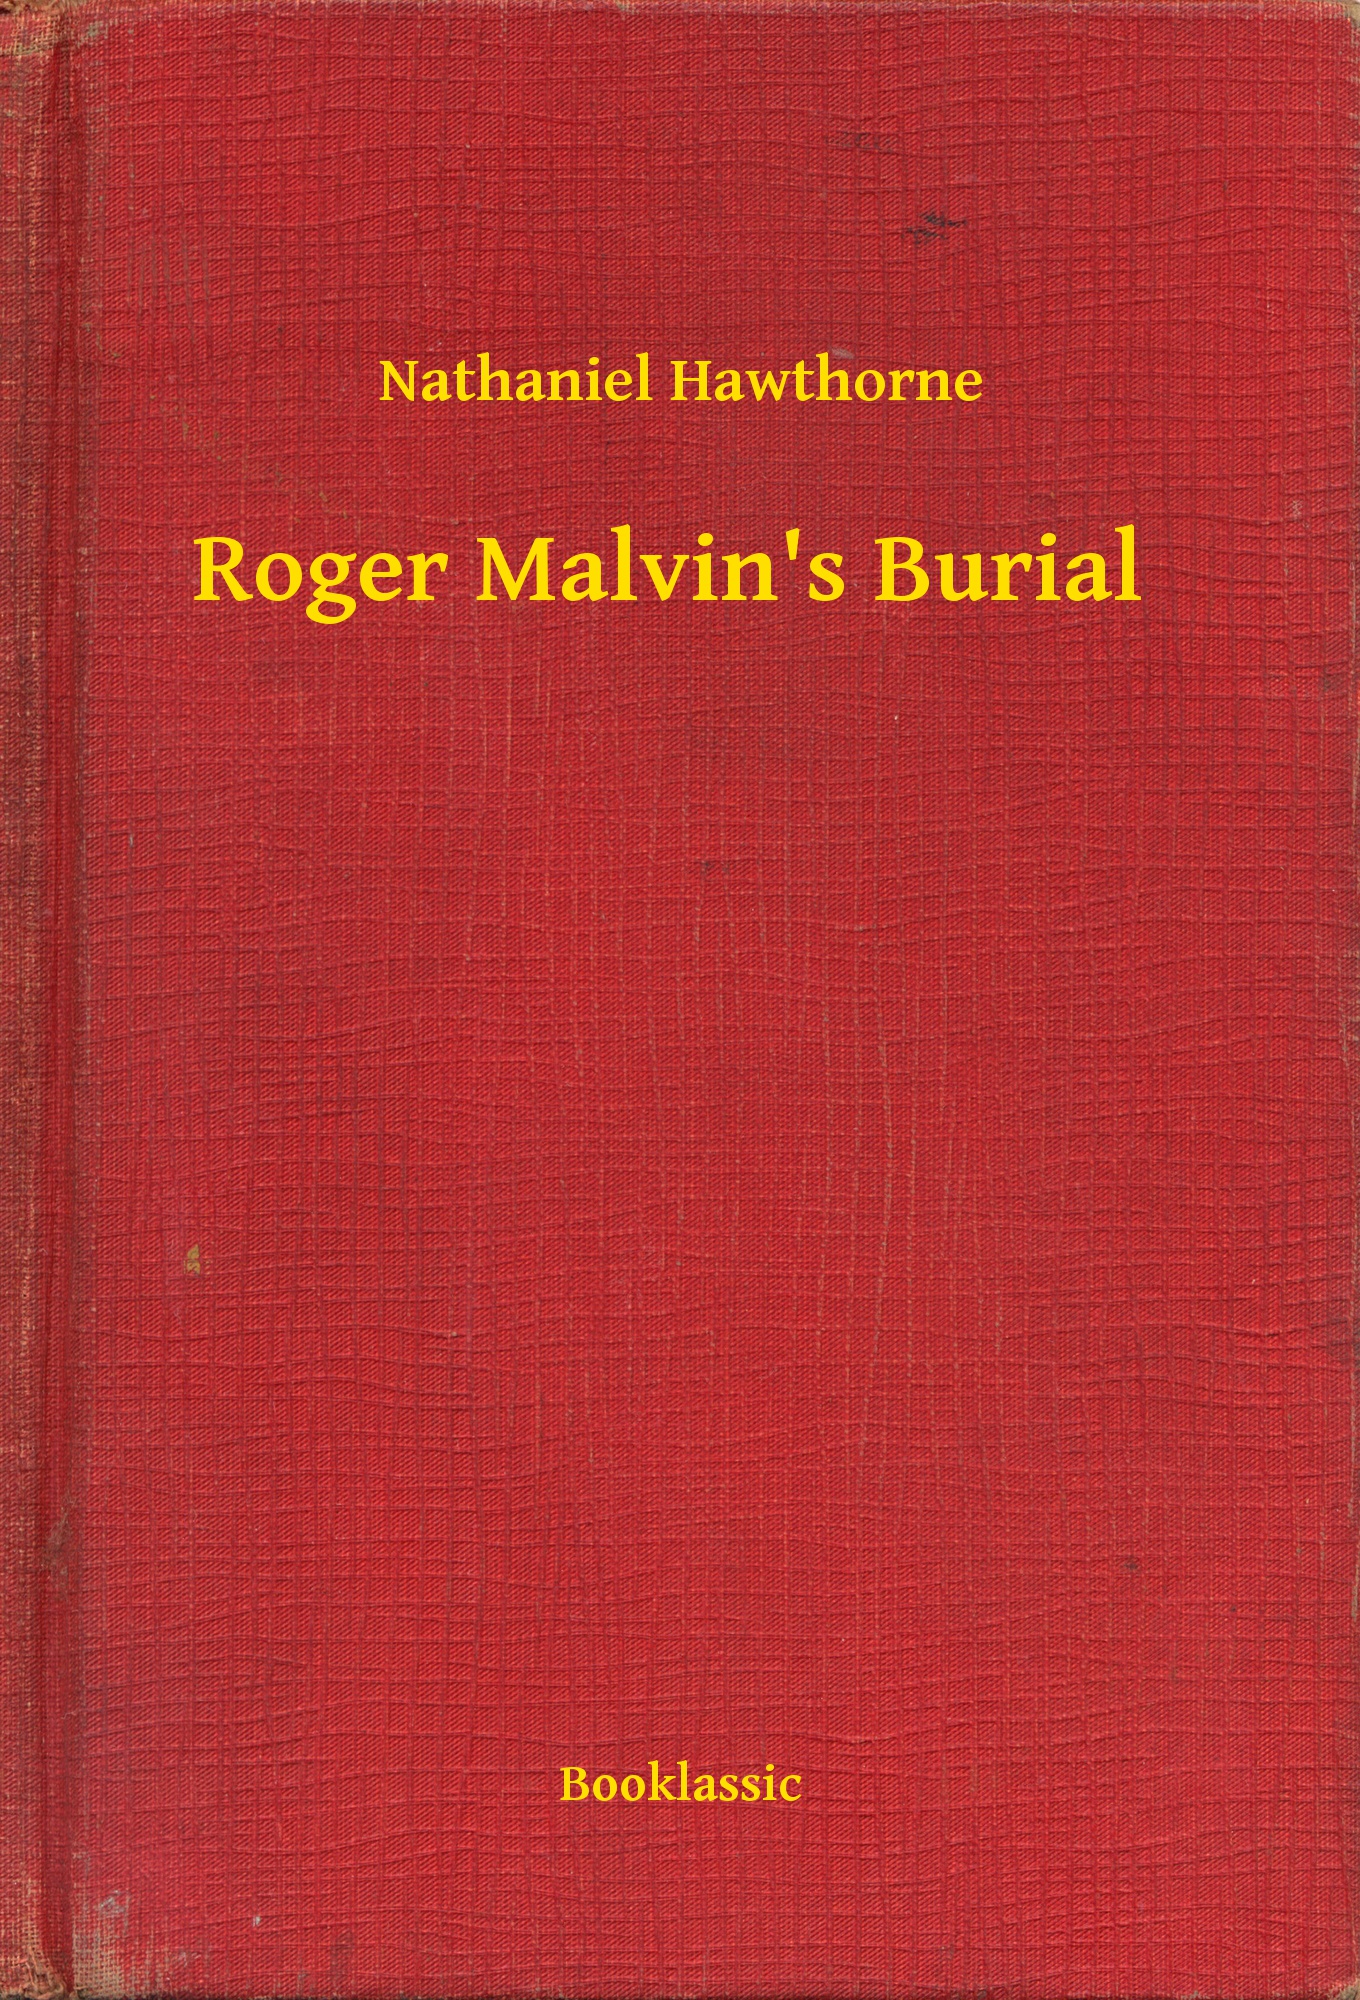 Roger Malvin"s Burial